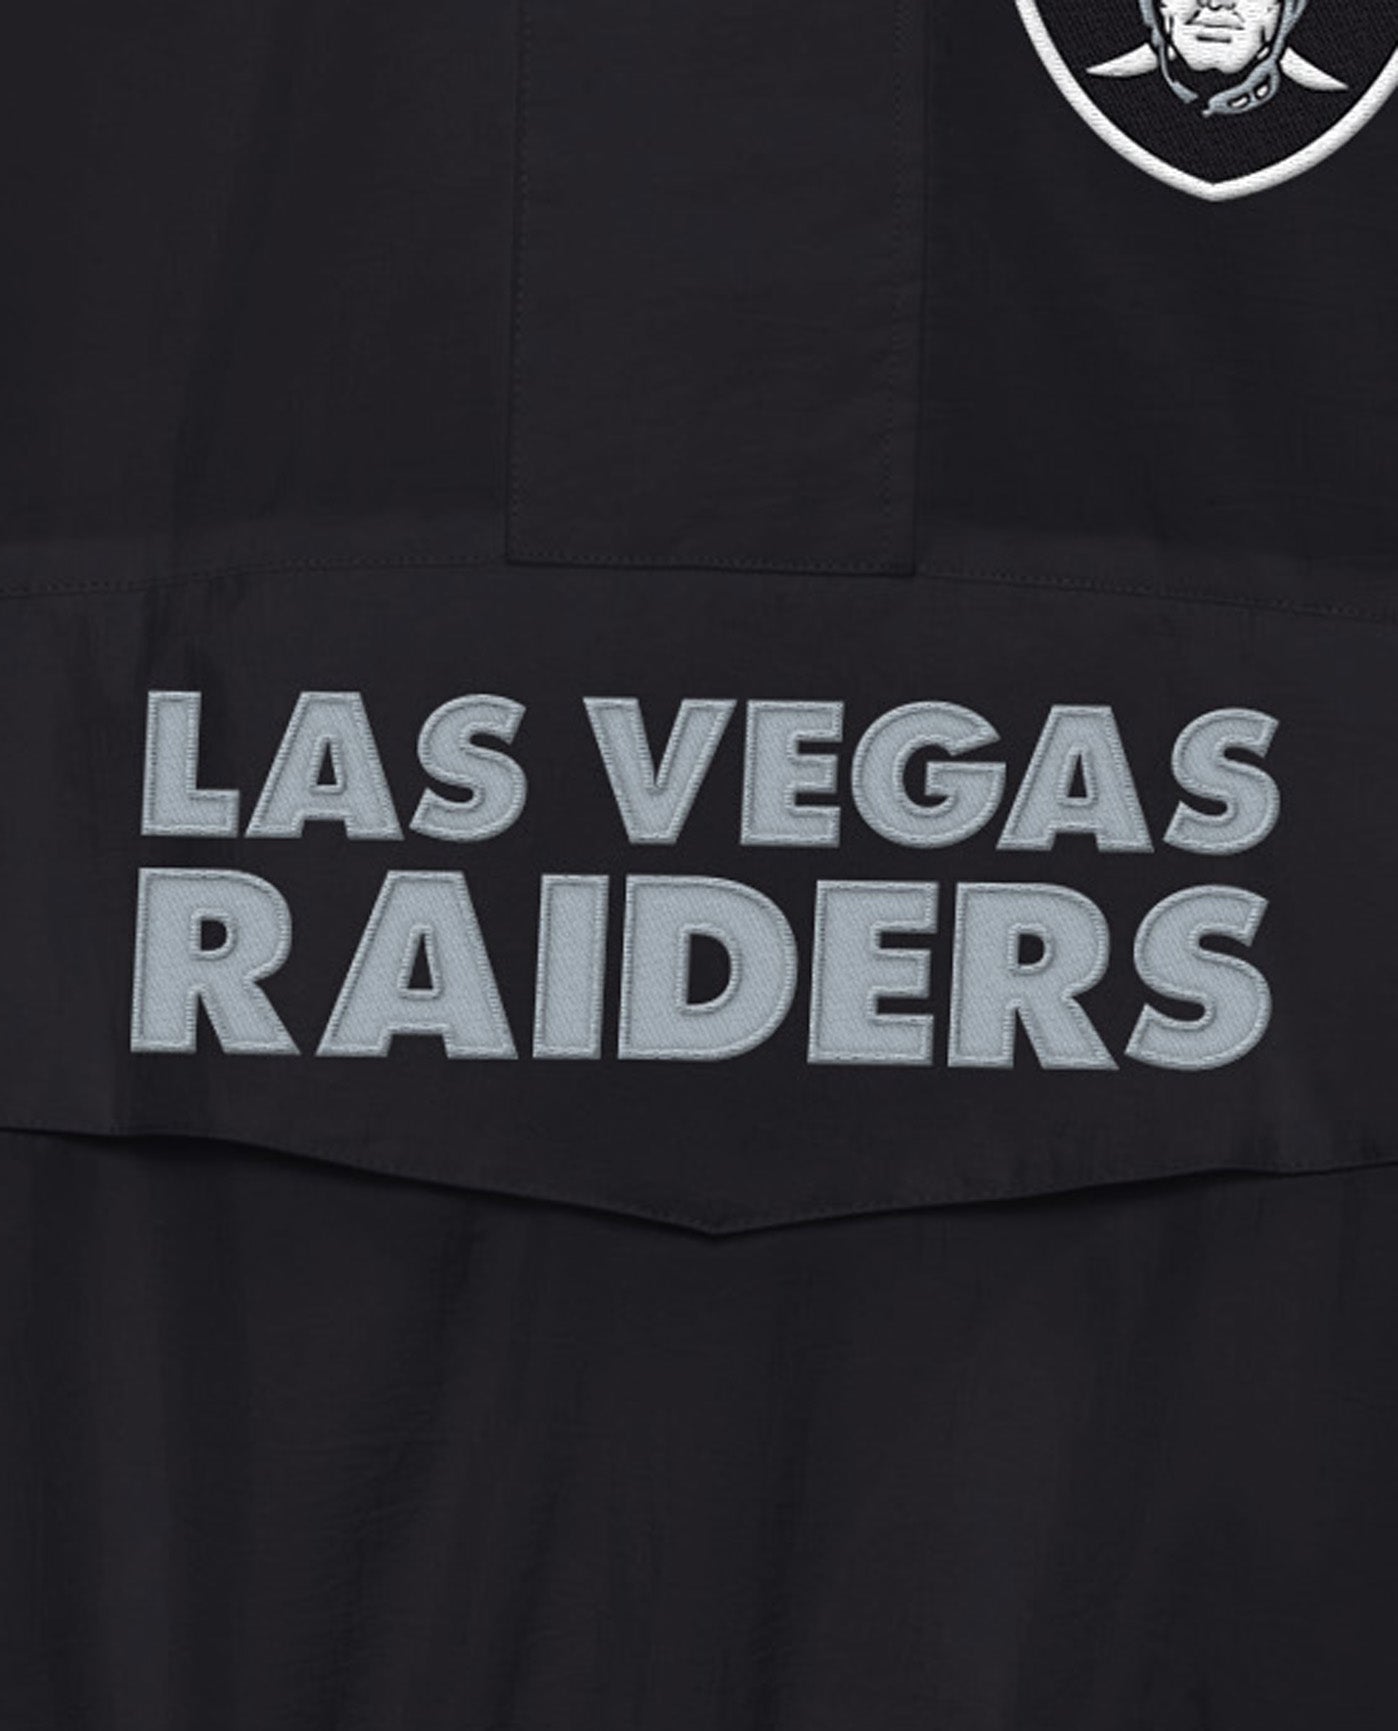 Las Vegas Raiders Womens in Las Vegas Raiders Team Shop 